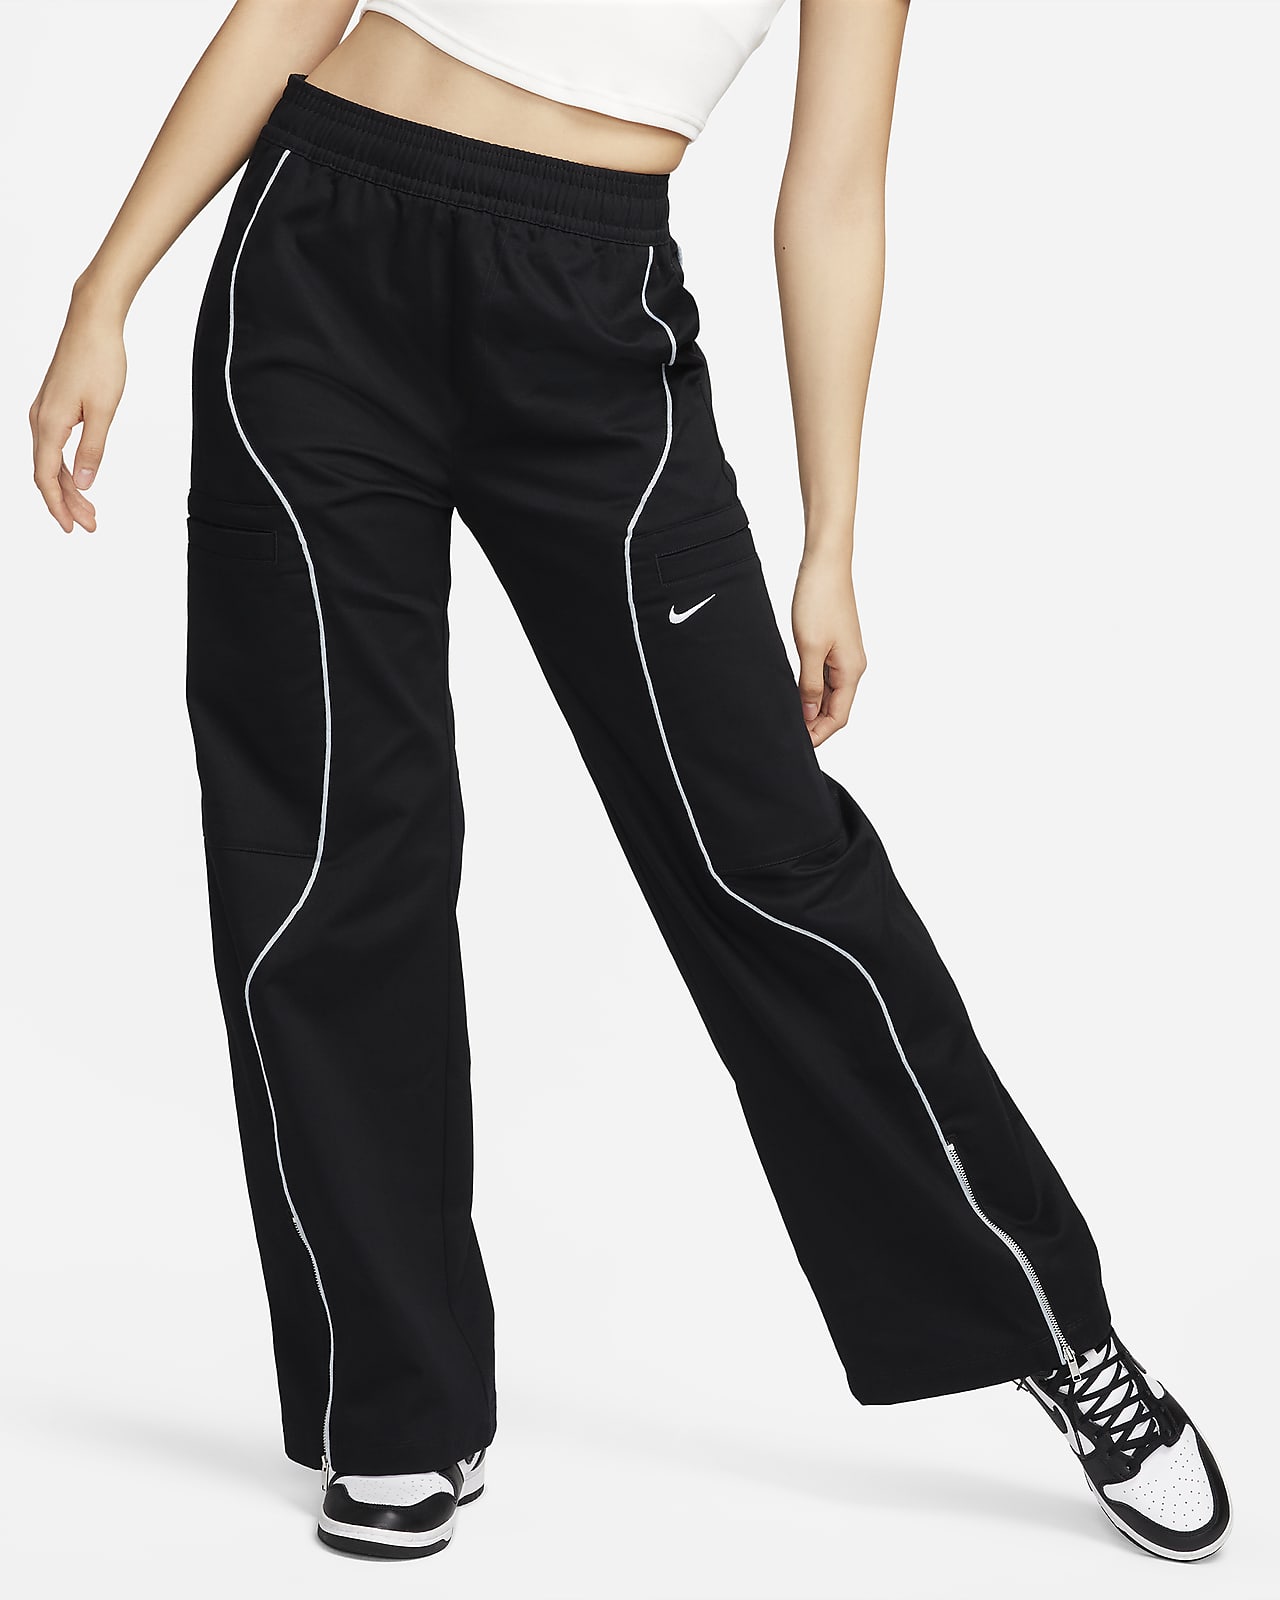 Pantalon tissé taille haute Nike Sportswear pour femme